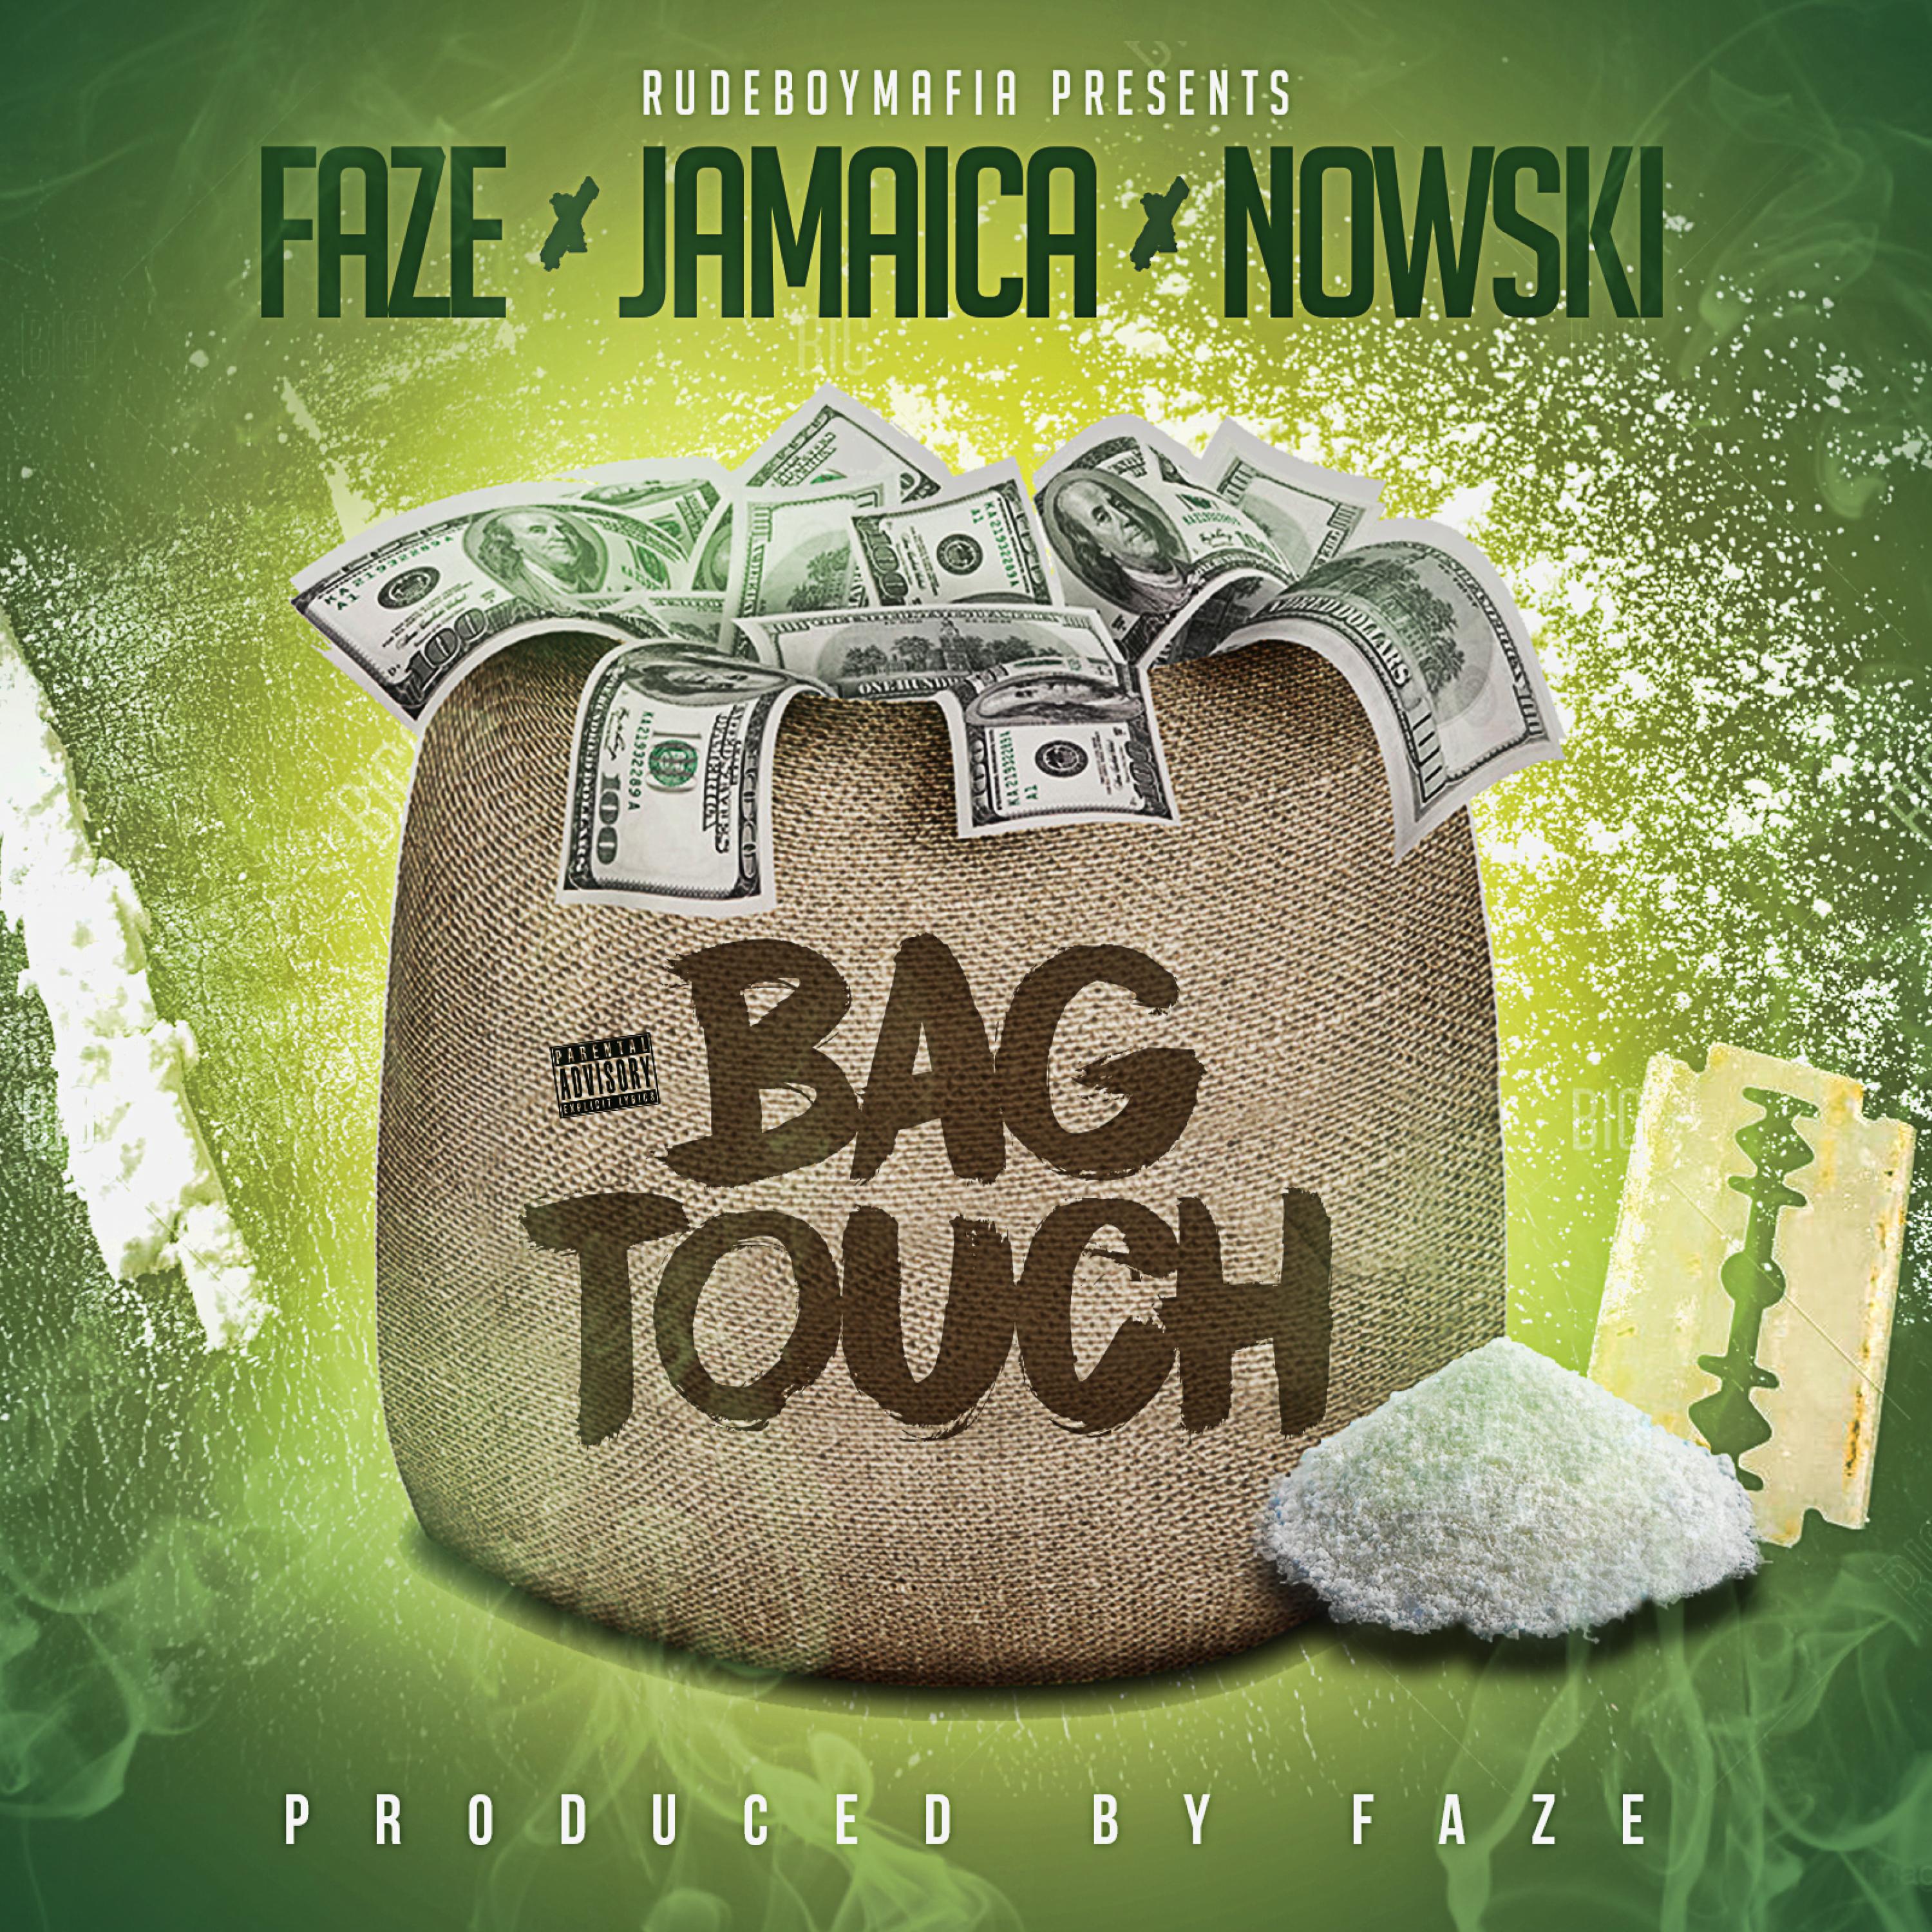 Bag Touch (feat. Jamaica & Nowski)